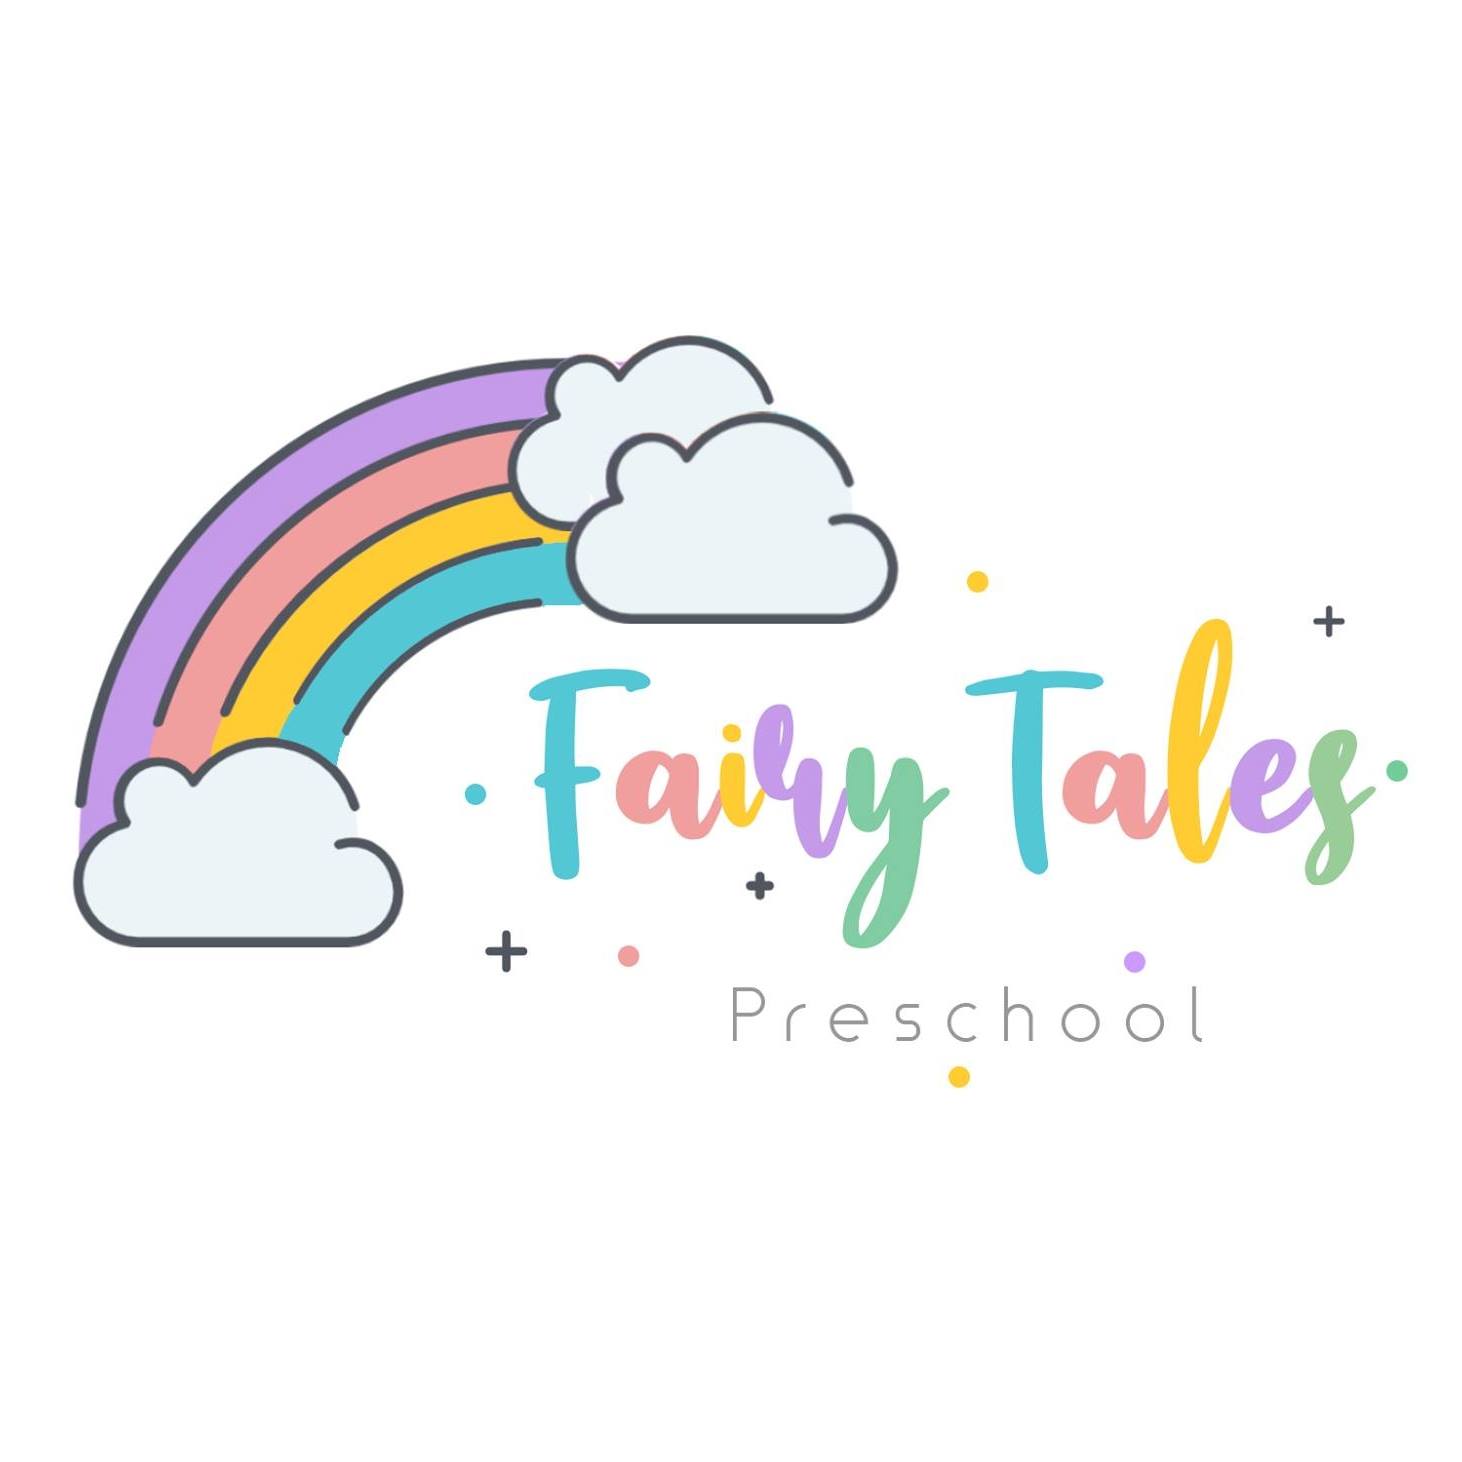 Nursery logo fary tales nursery